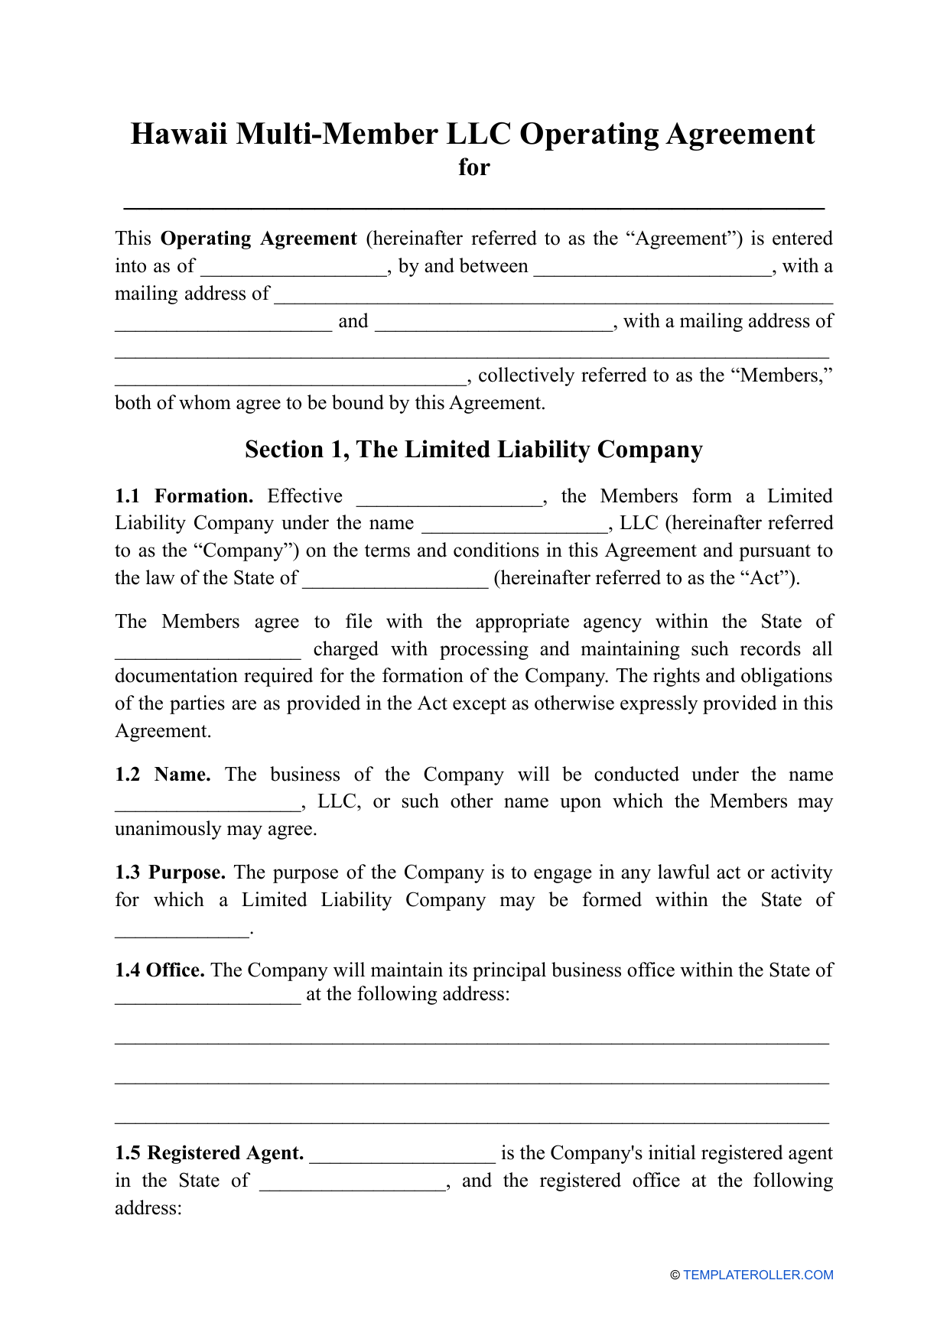 Multi-Member LLC Operating Agreement Template - Hawaii, Page 1